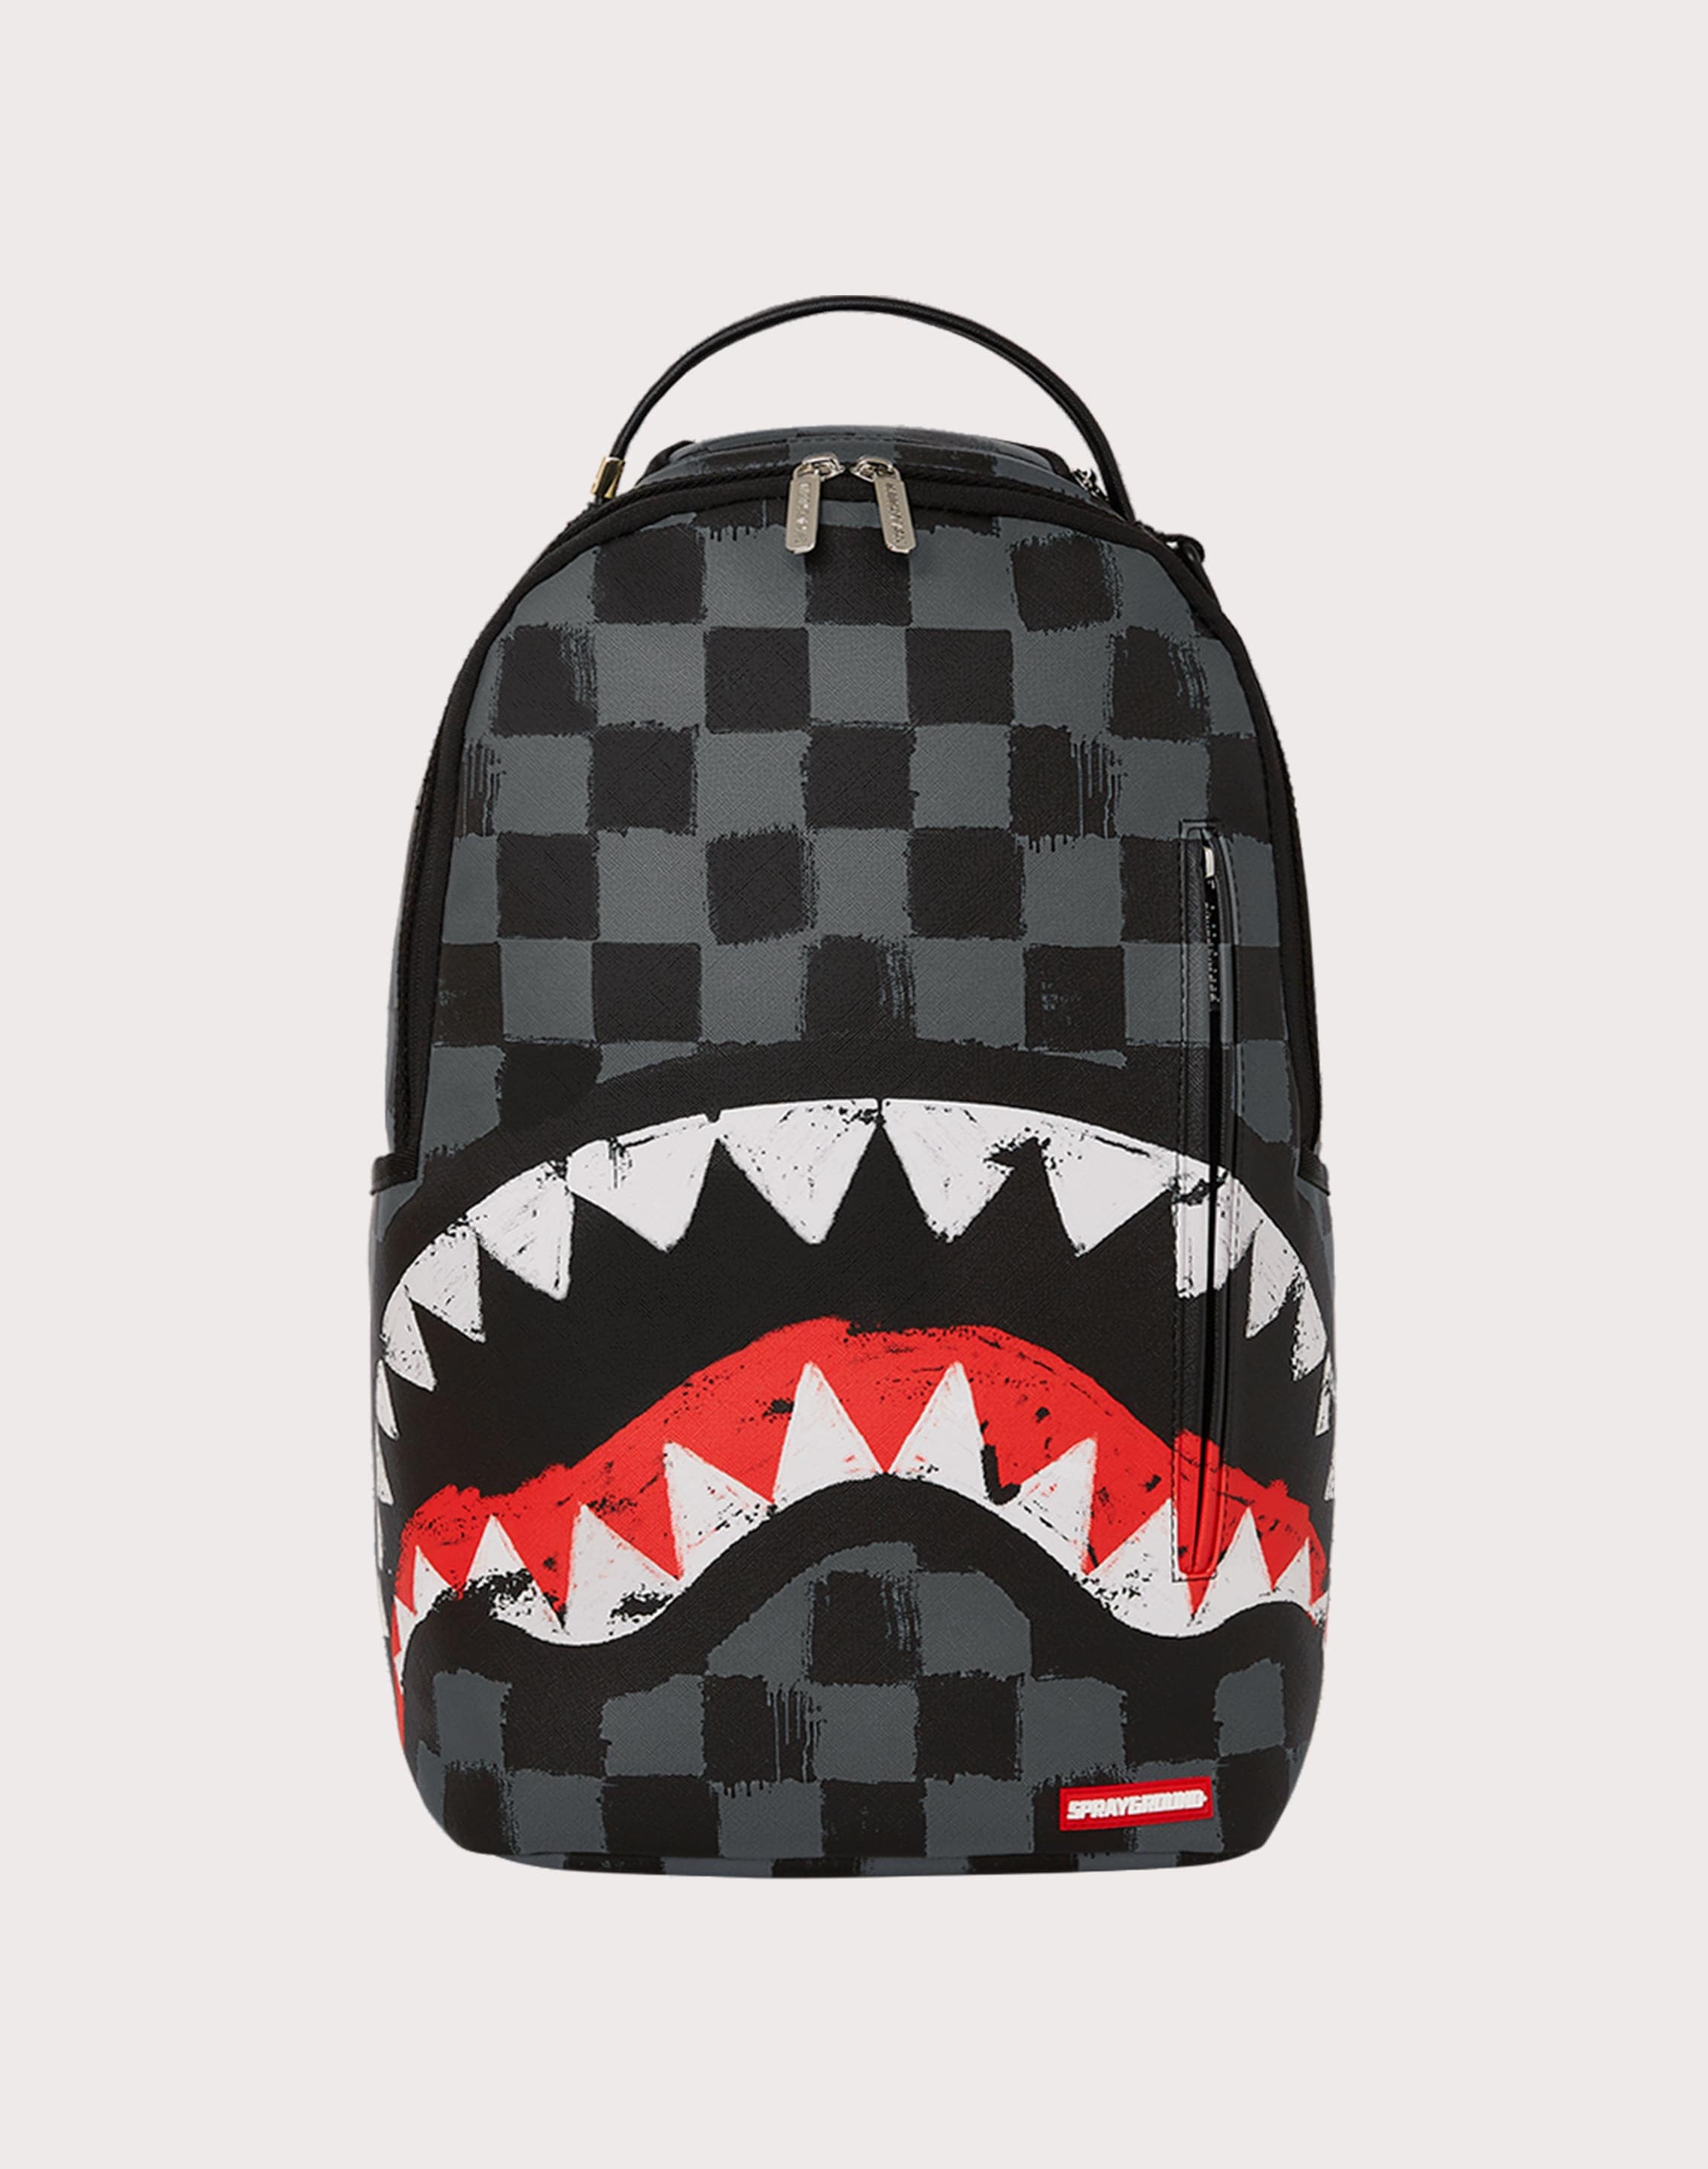 Sprayground Shark backpack  Shark backpack, Sprayground, Stylish school  bags